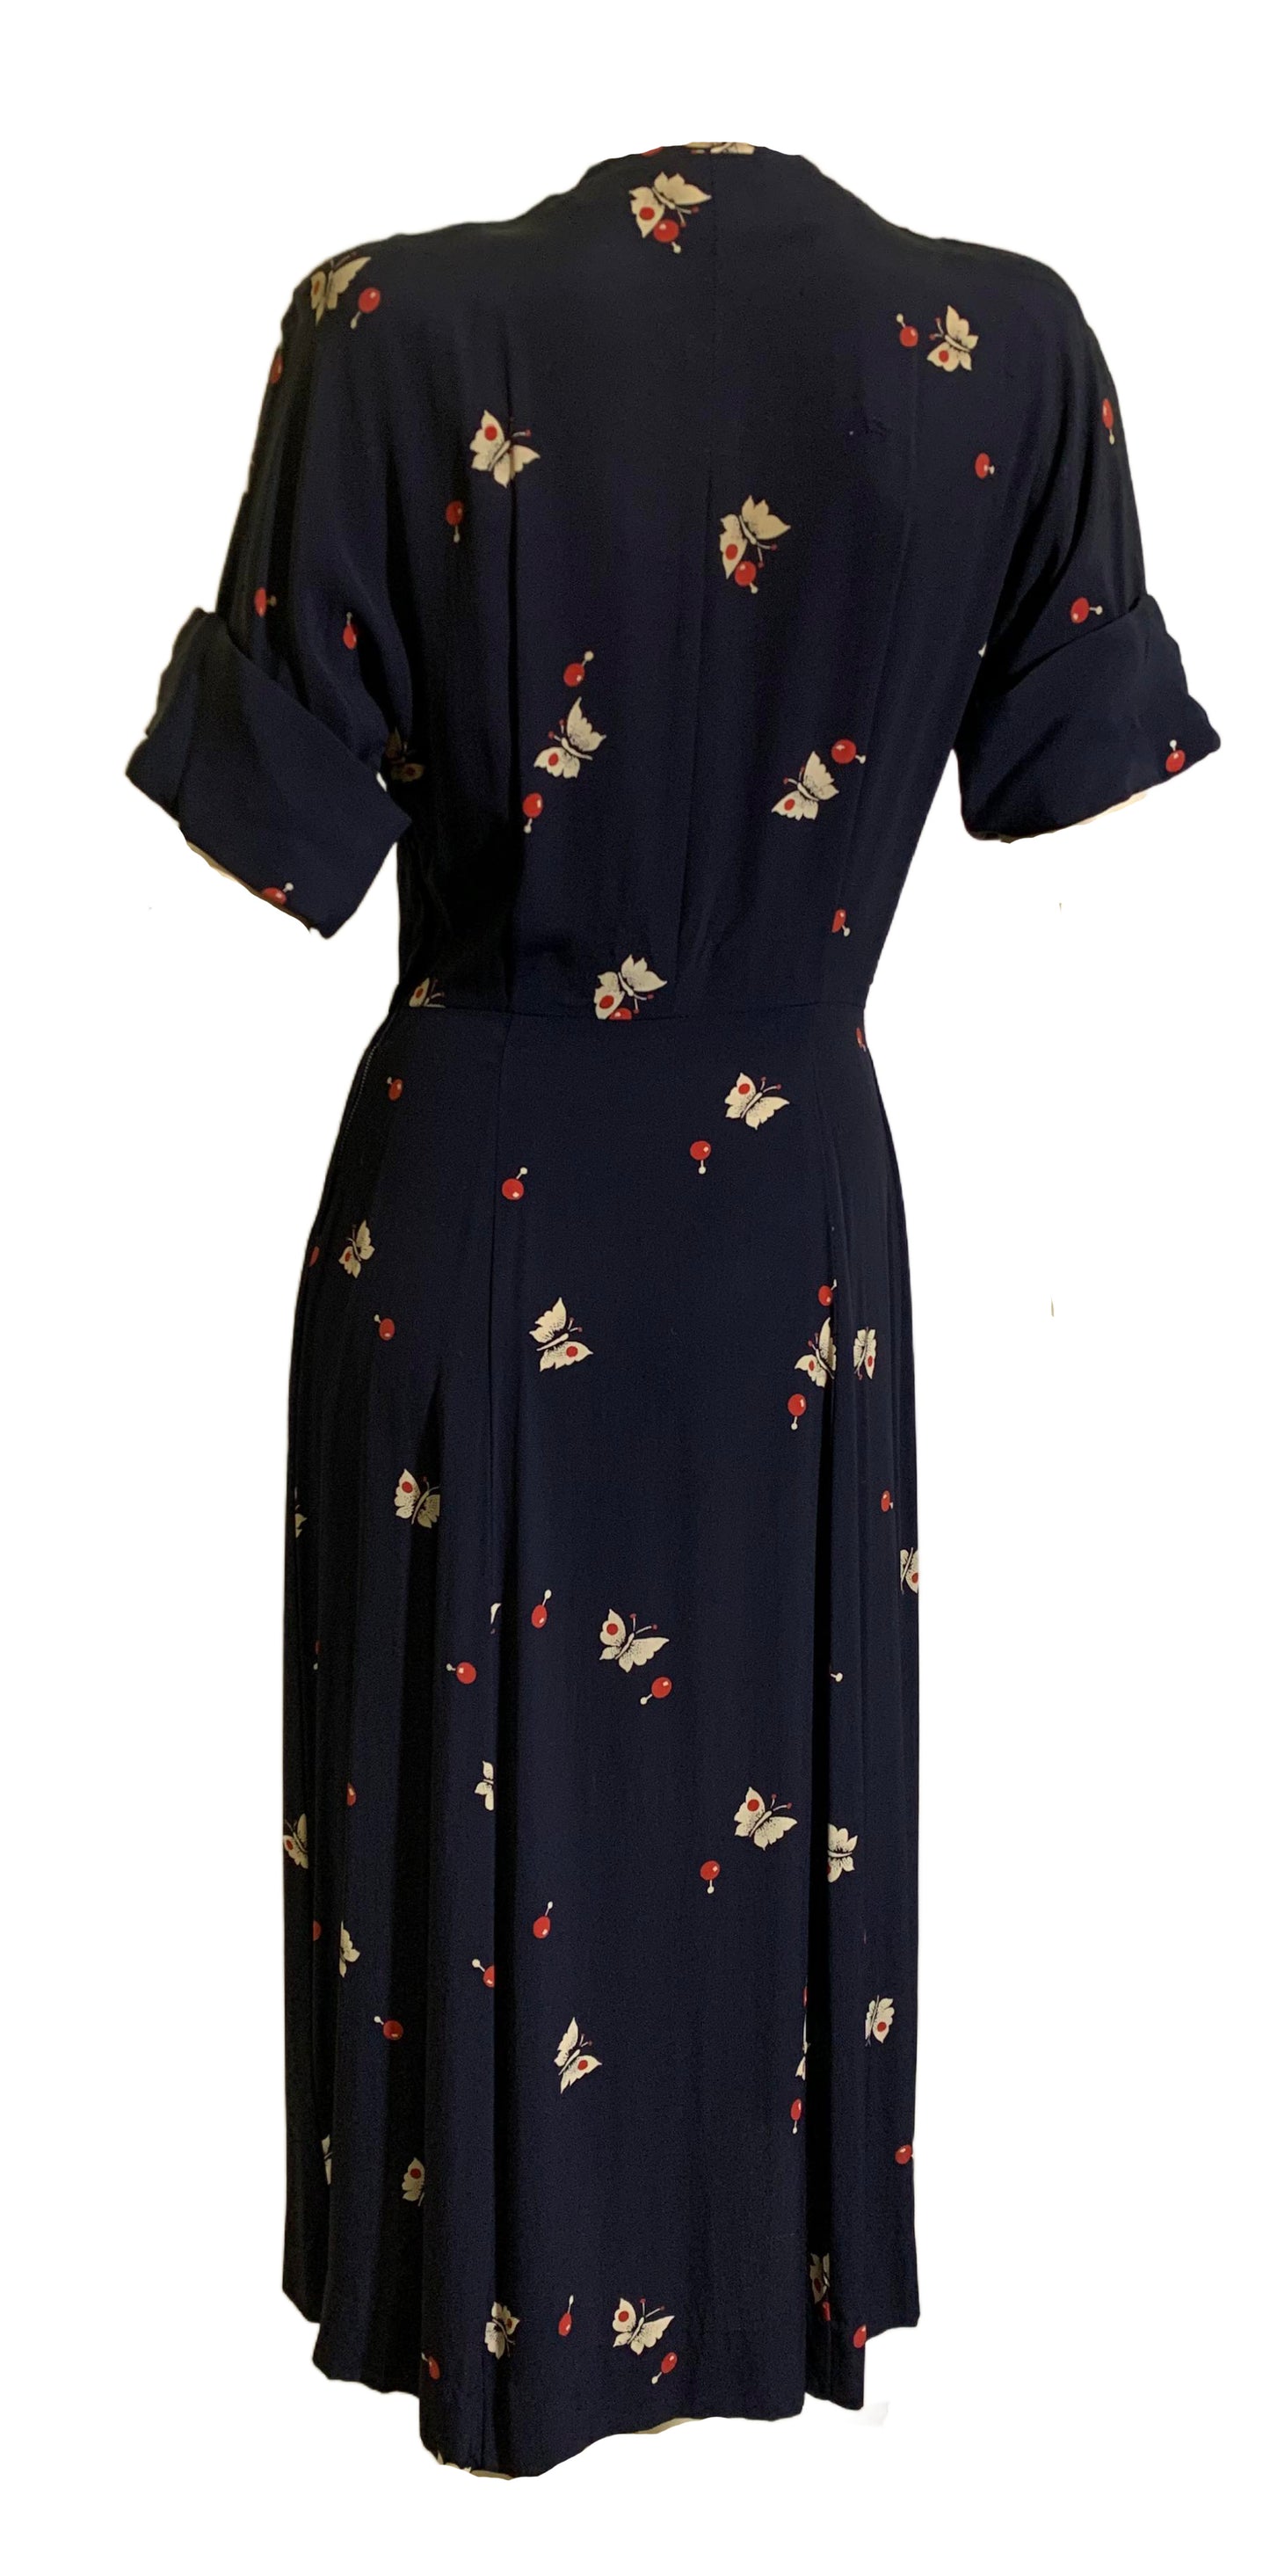 Currants and Butterflies! Deep Blue Rayon Surplice Bodice Dress circa 1940s